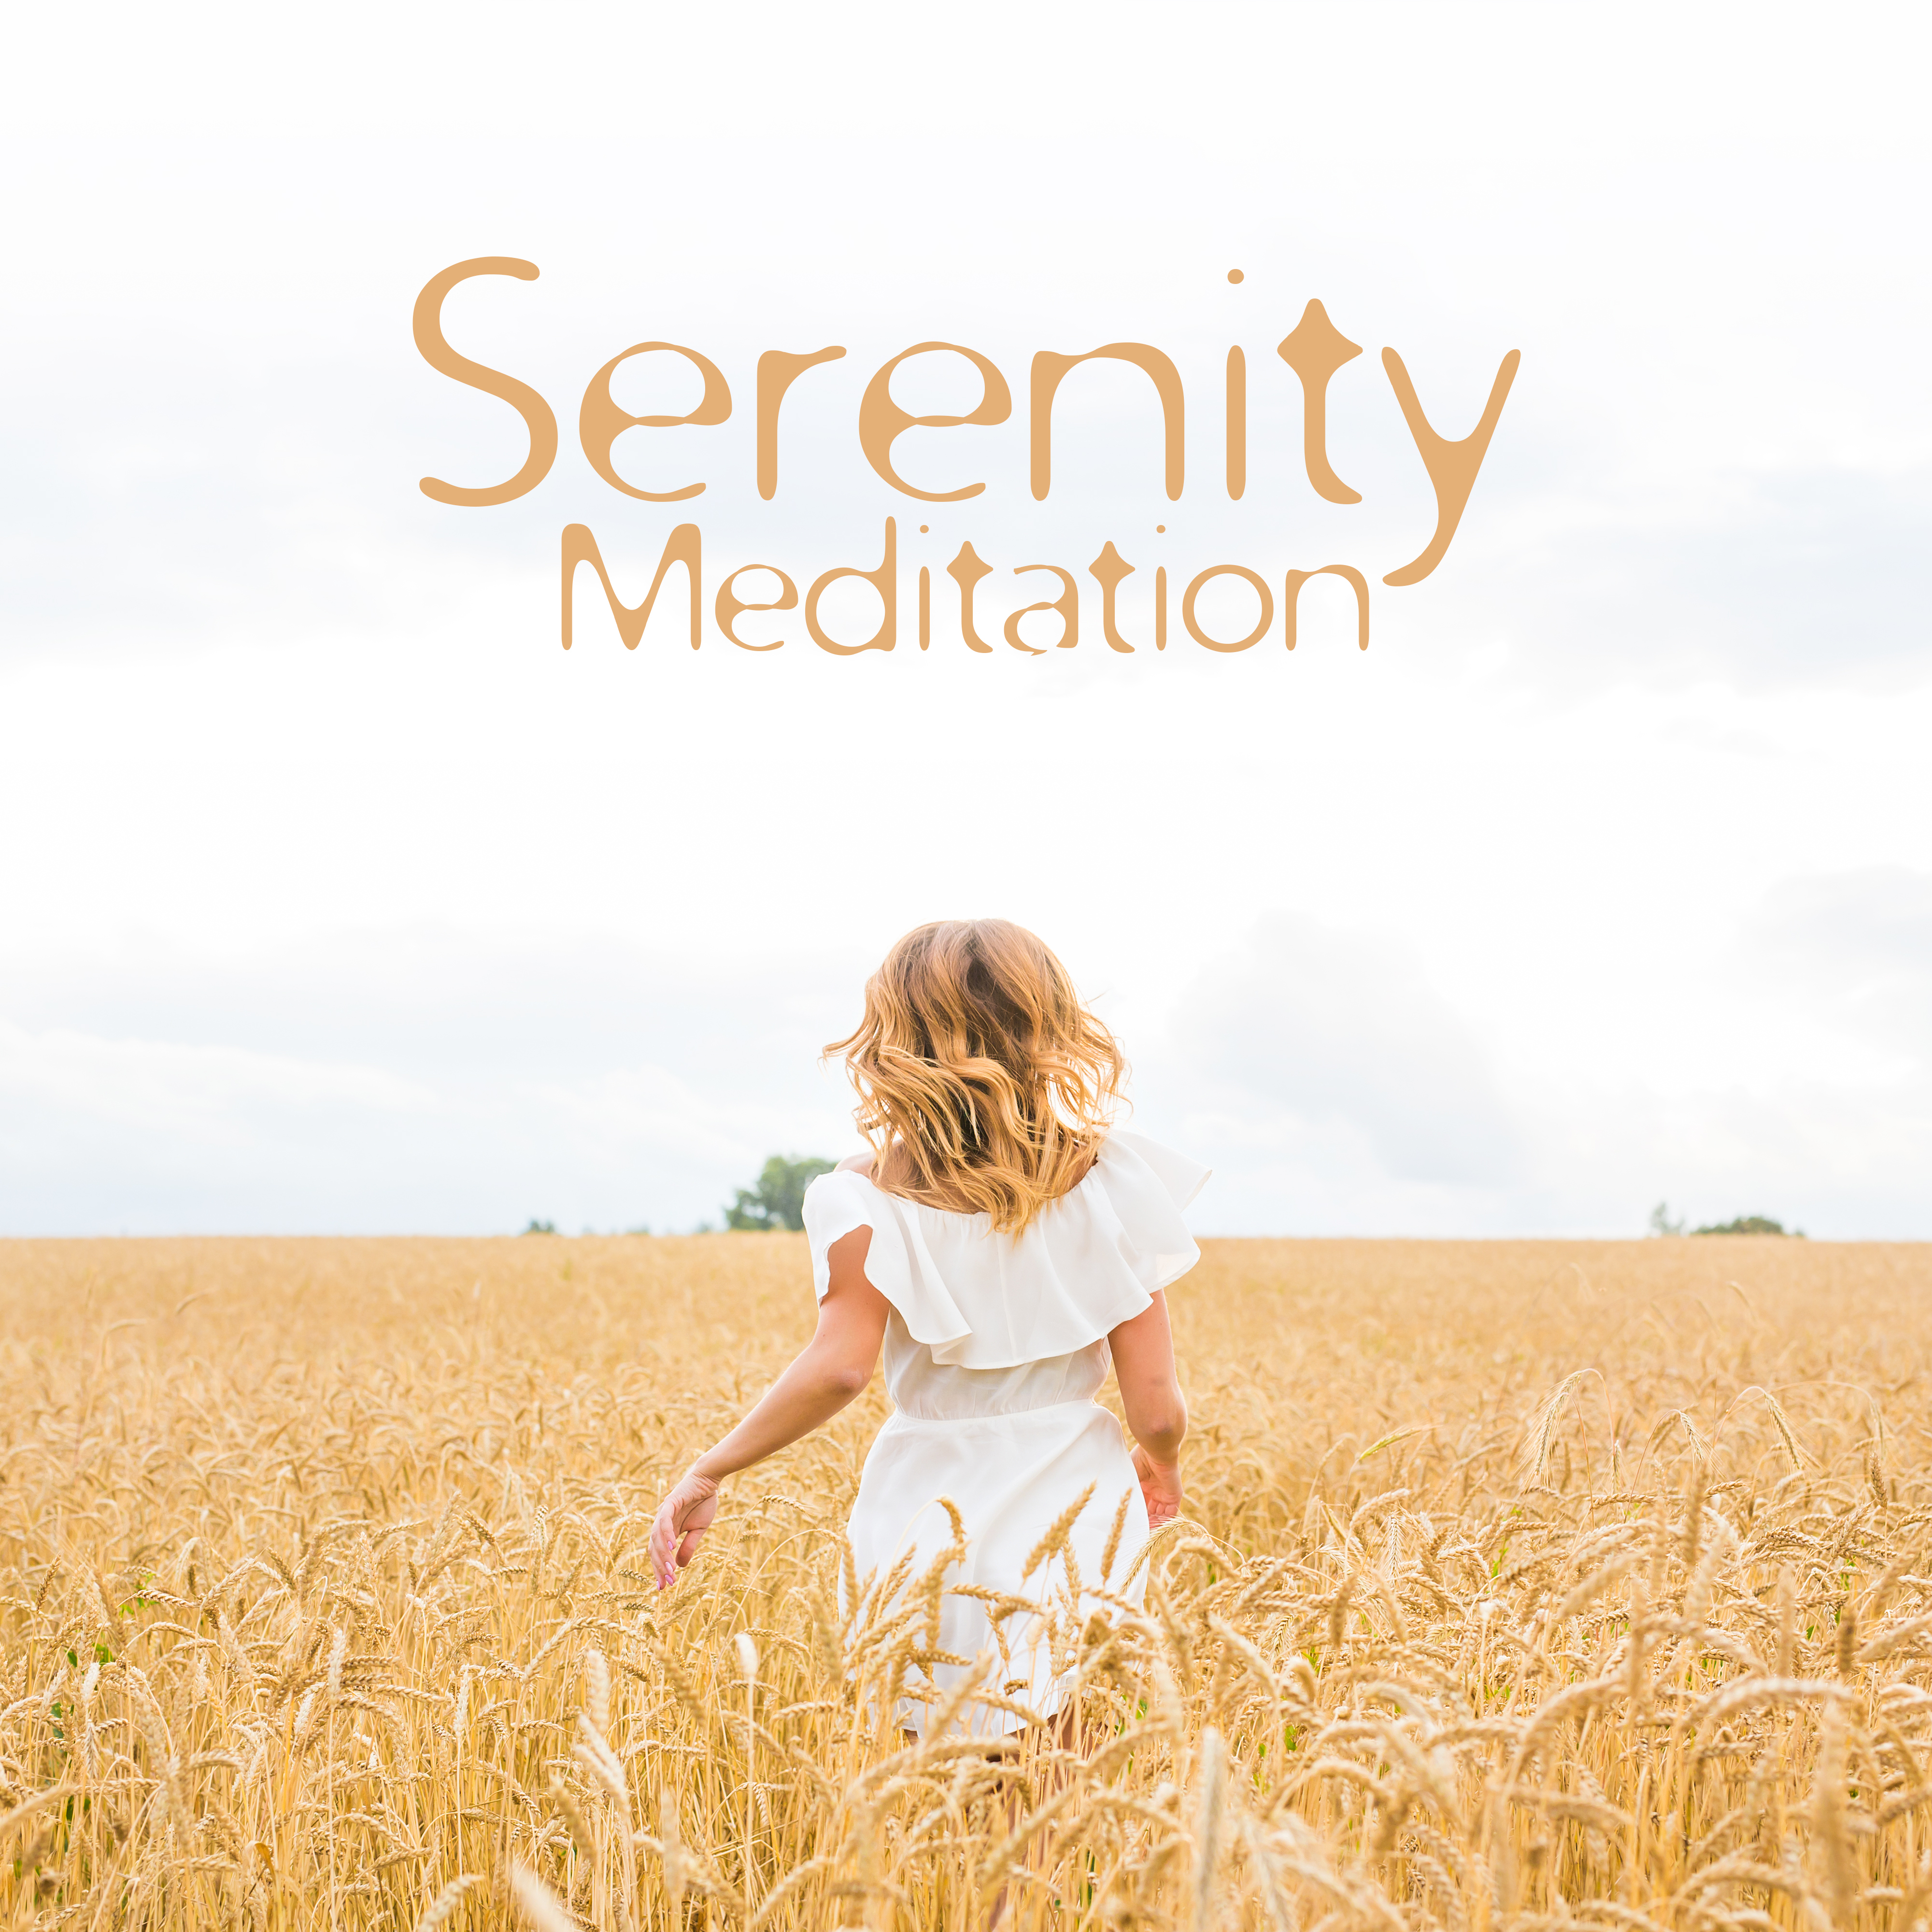 Serenity Meditation